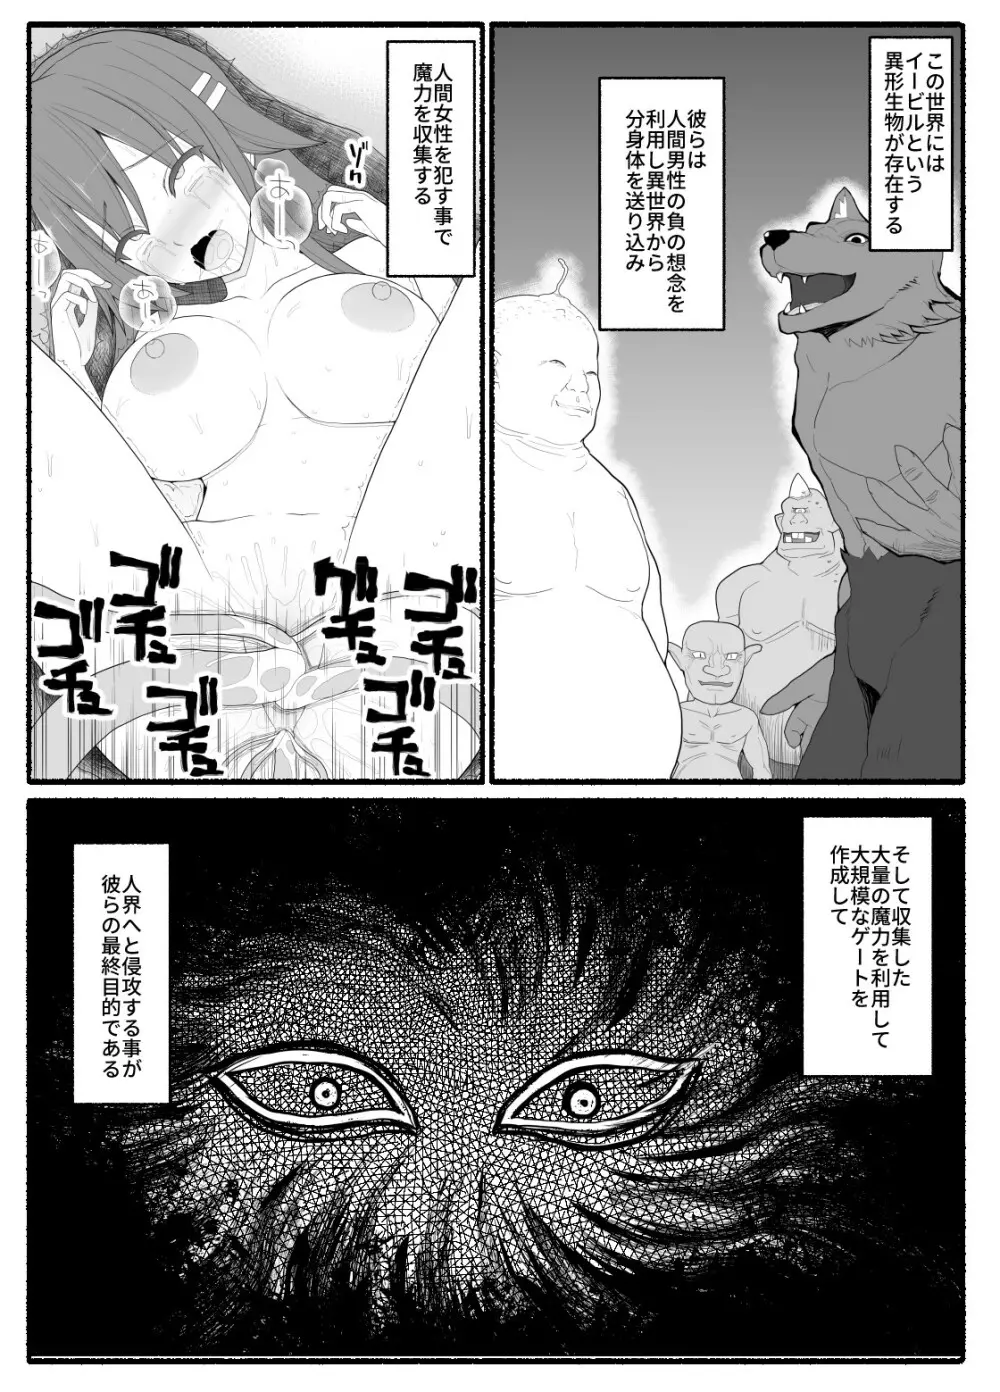 魔法少女vs淫魔生物6 2ページ